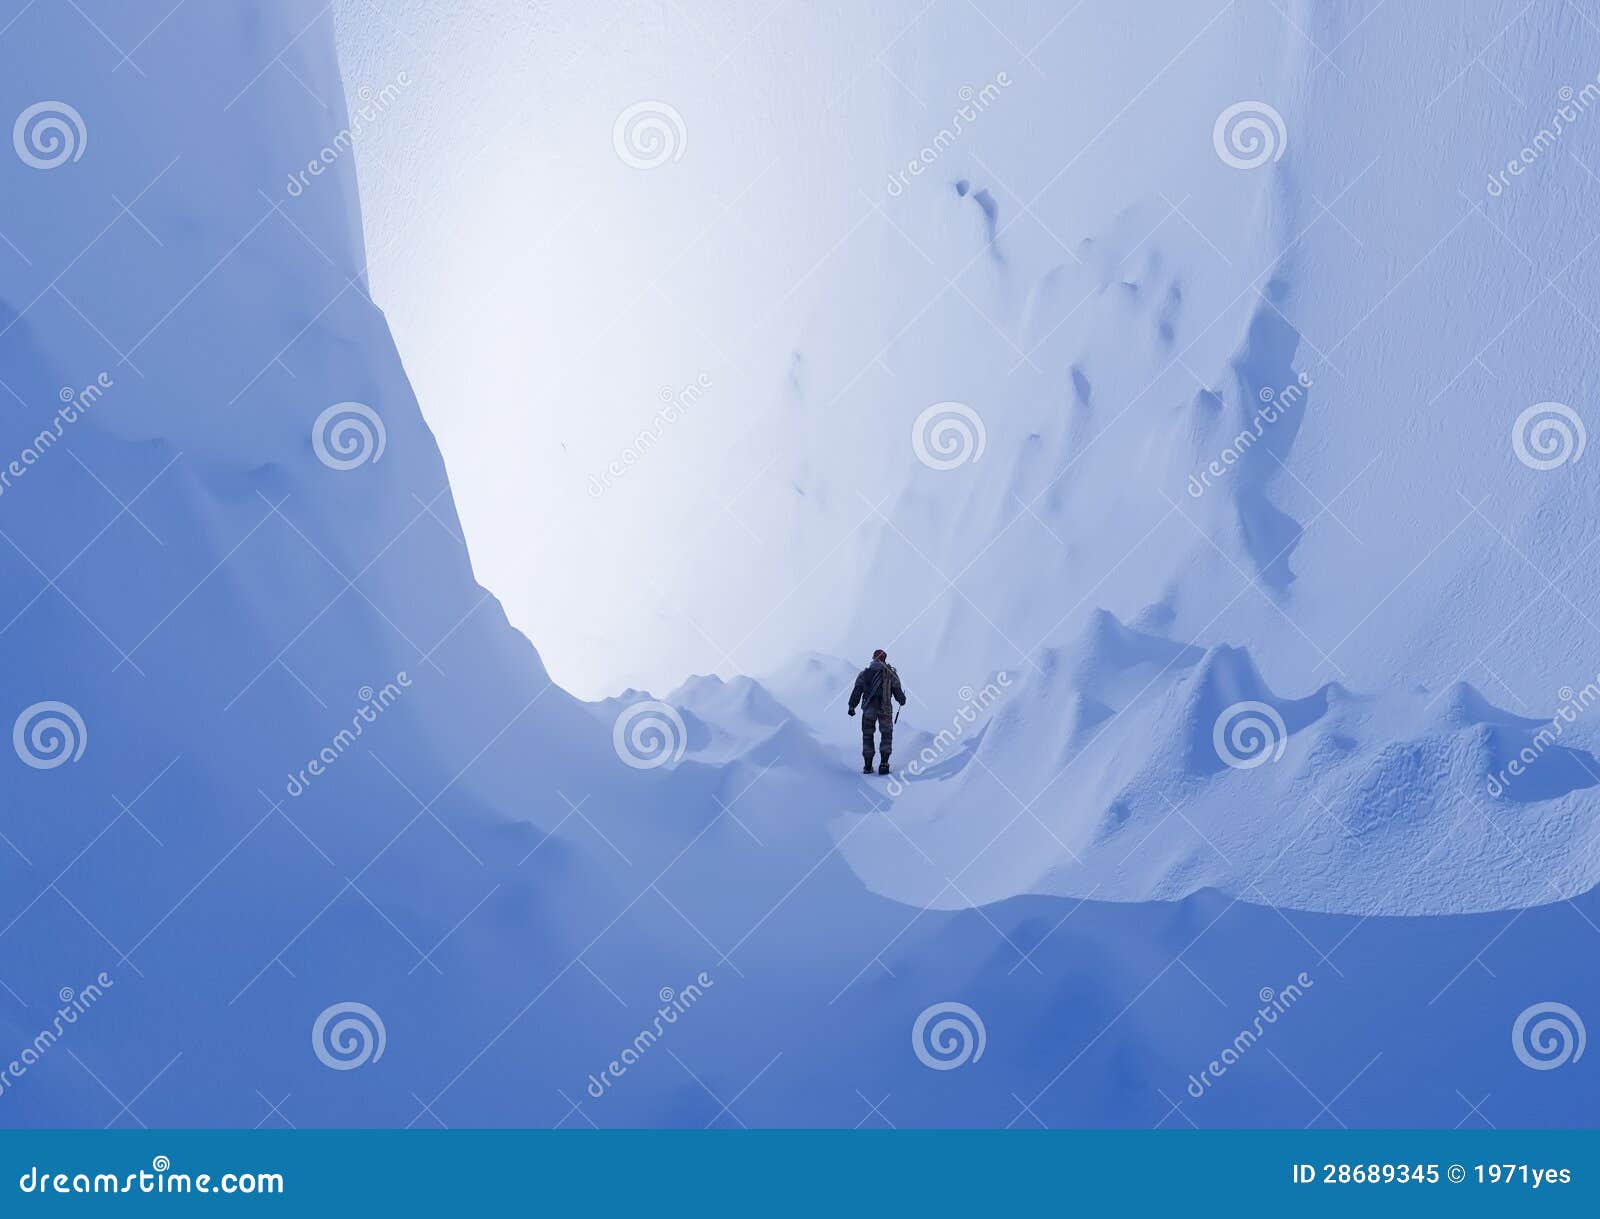 Snowy Mountains. stock illustration. Illustration of rock - 28689345